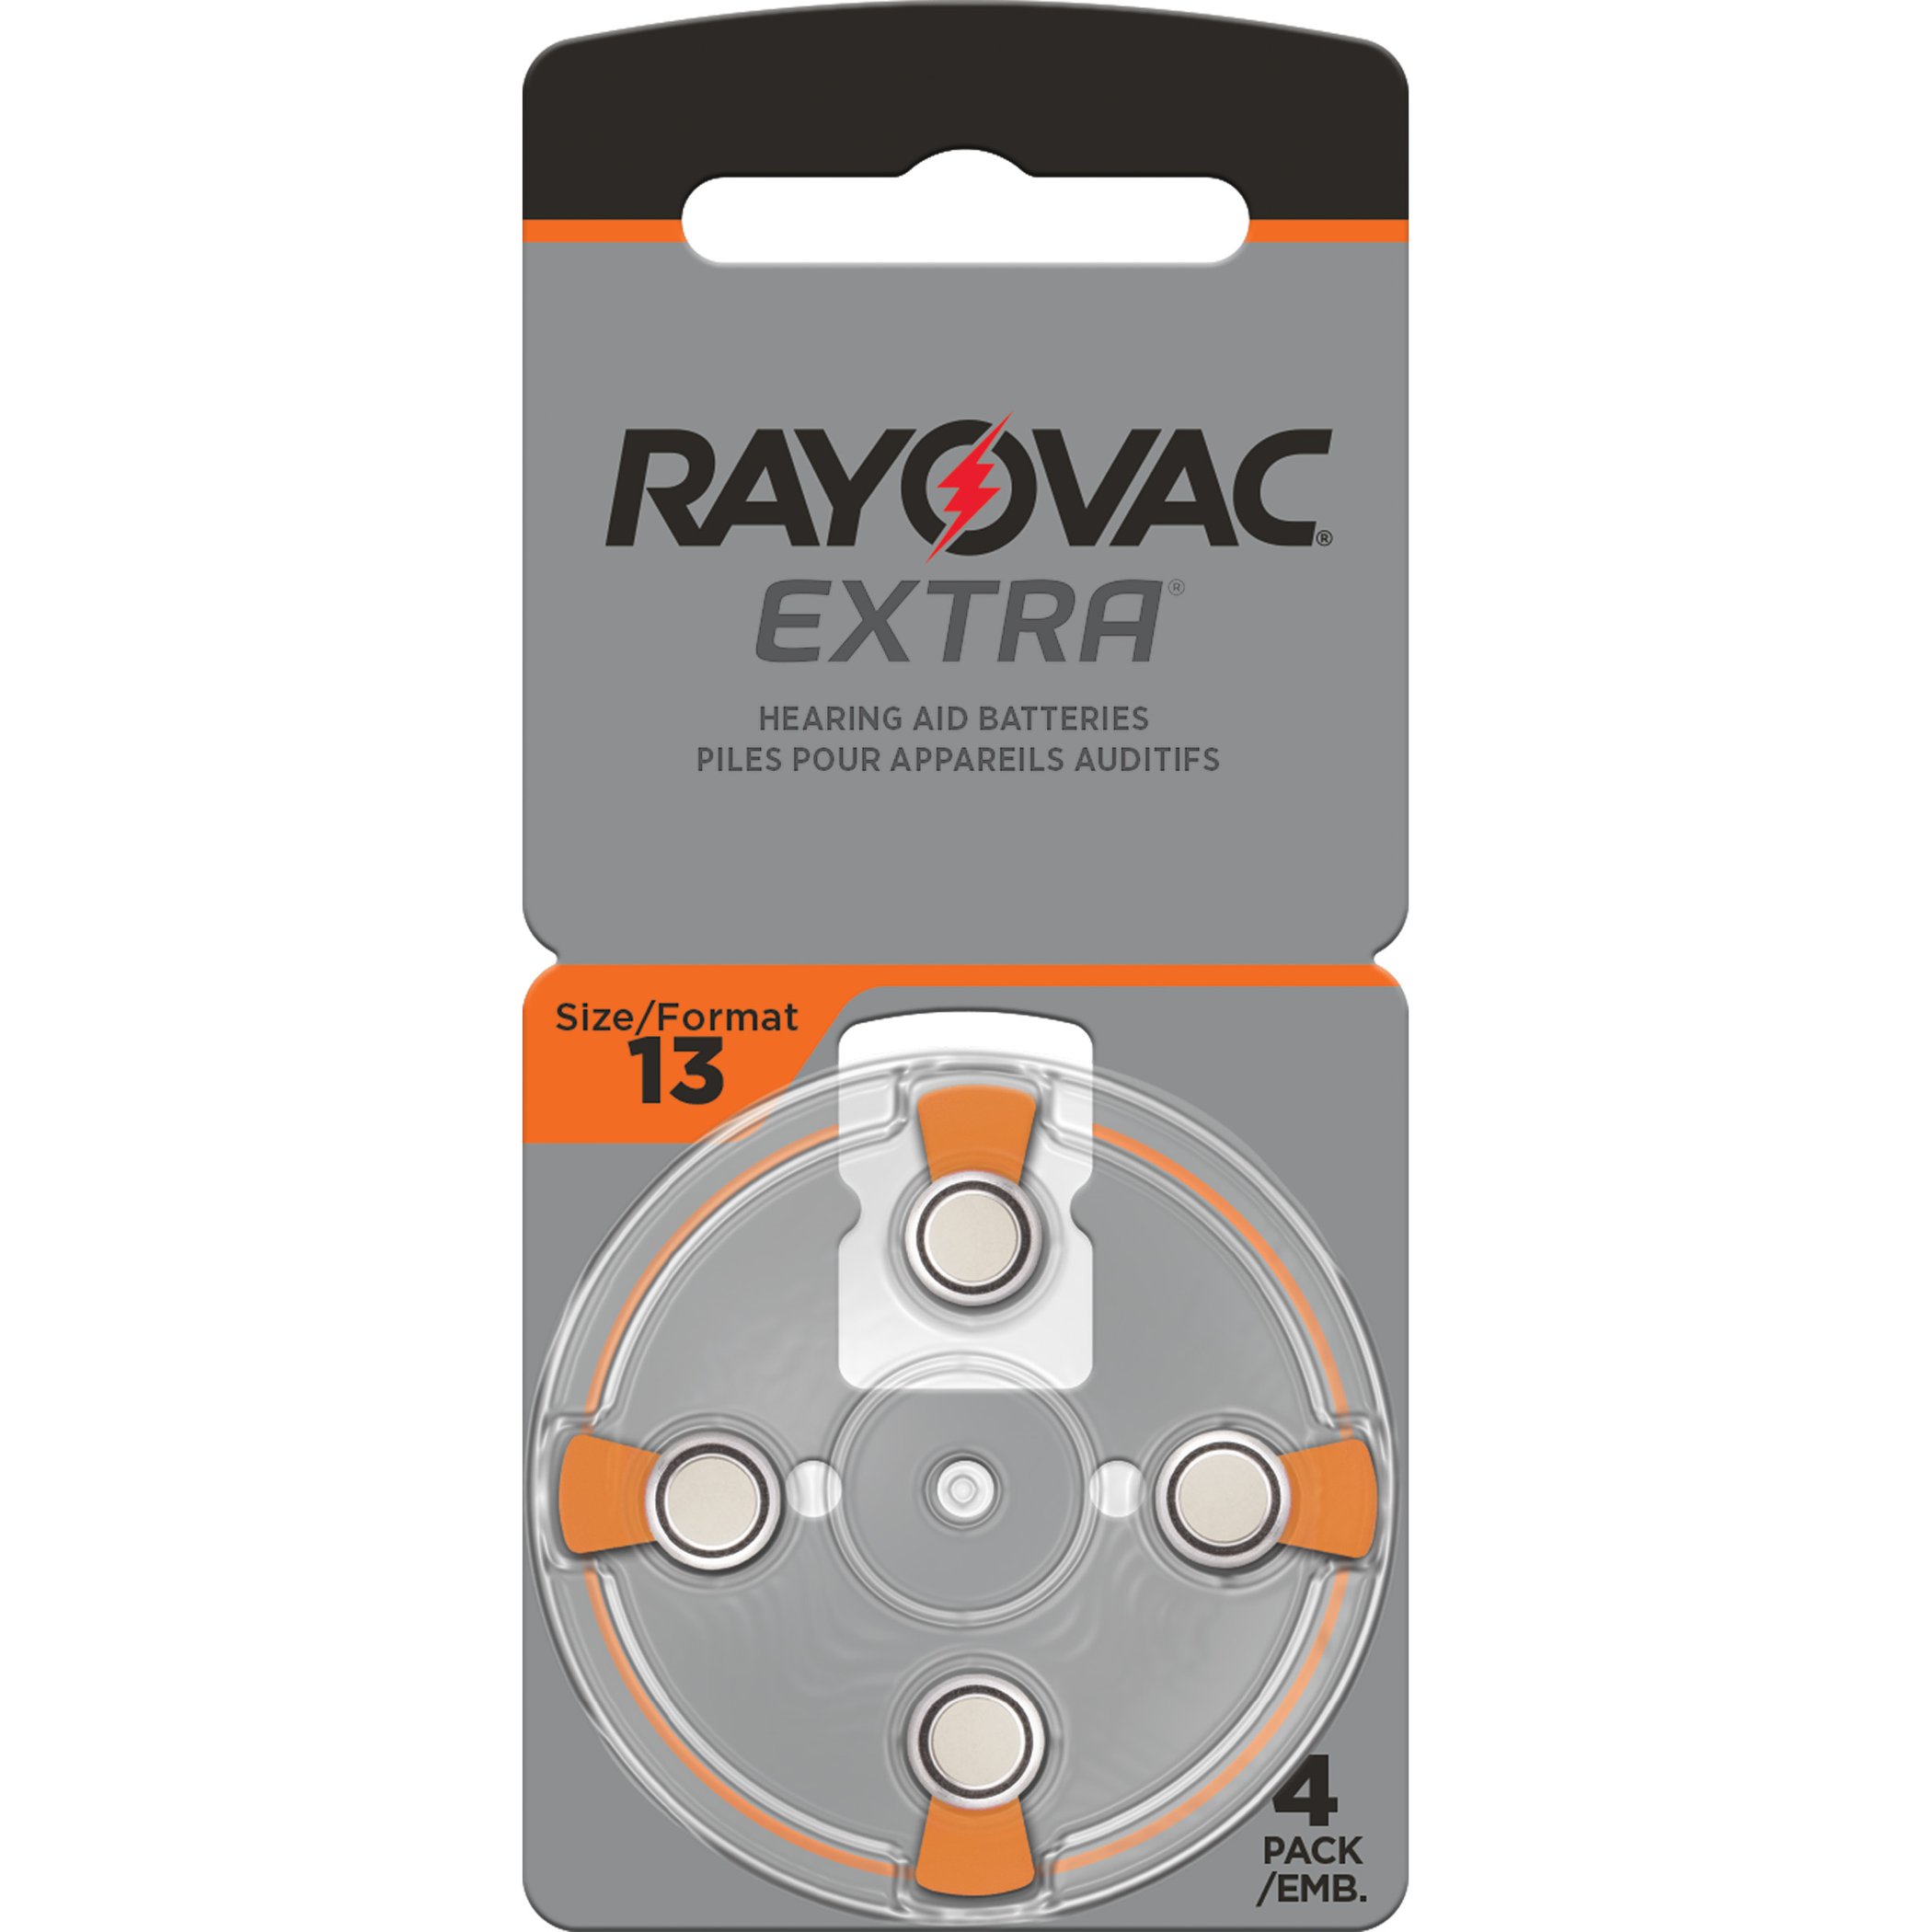 Rayovac Extra Size 13